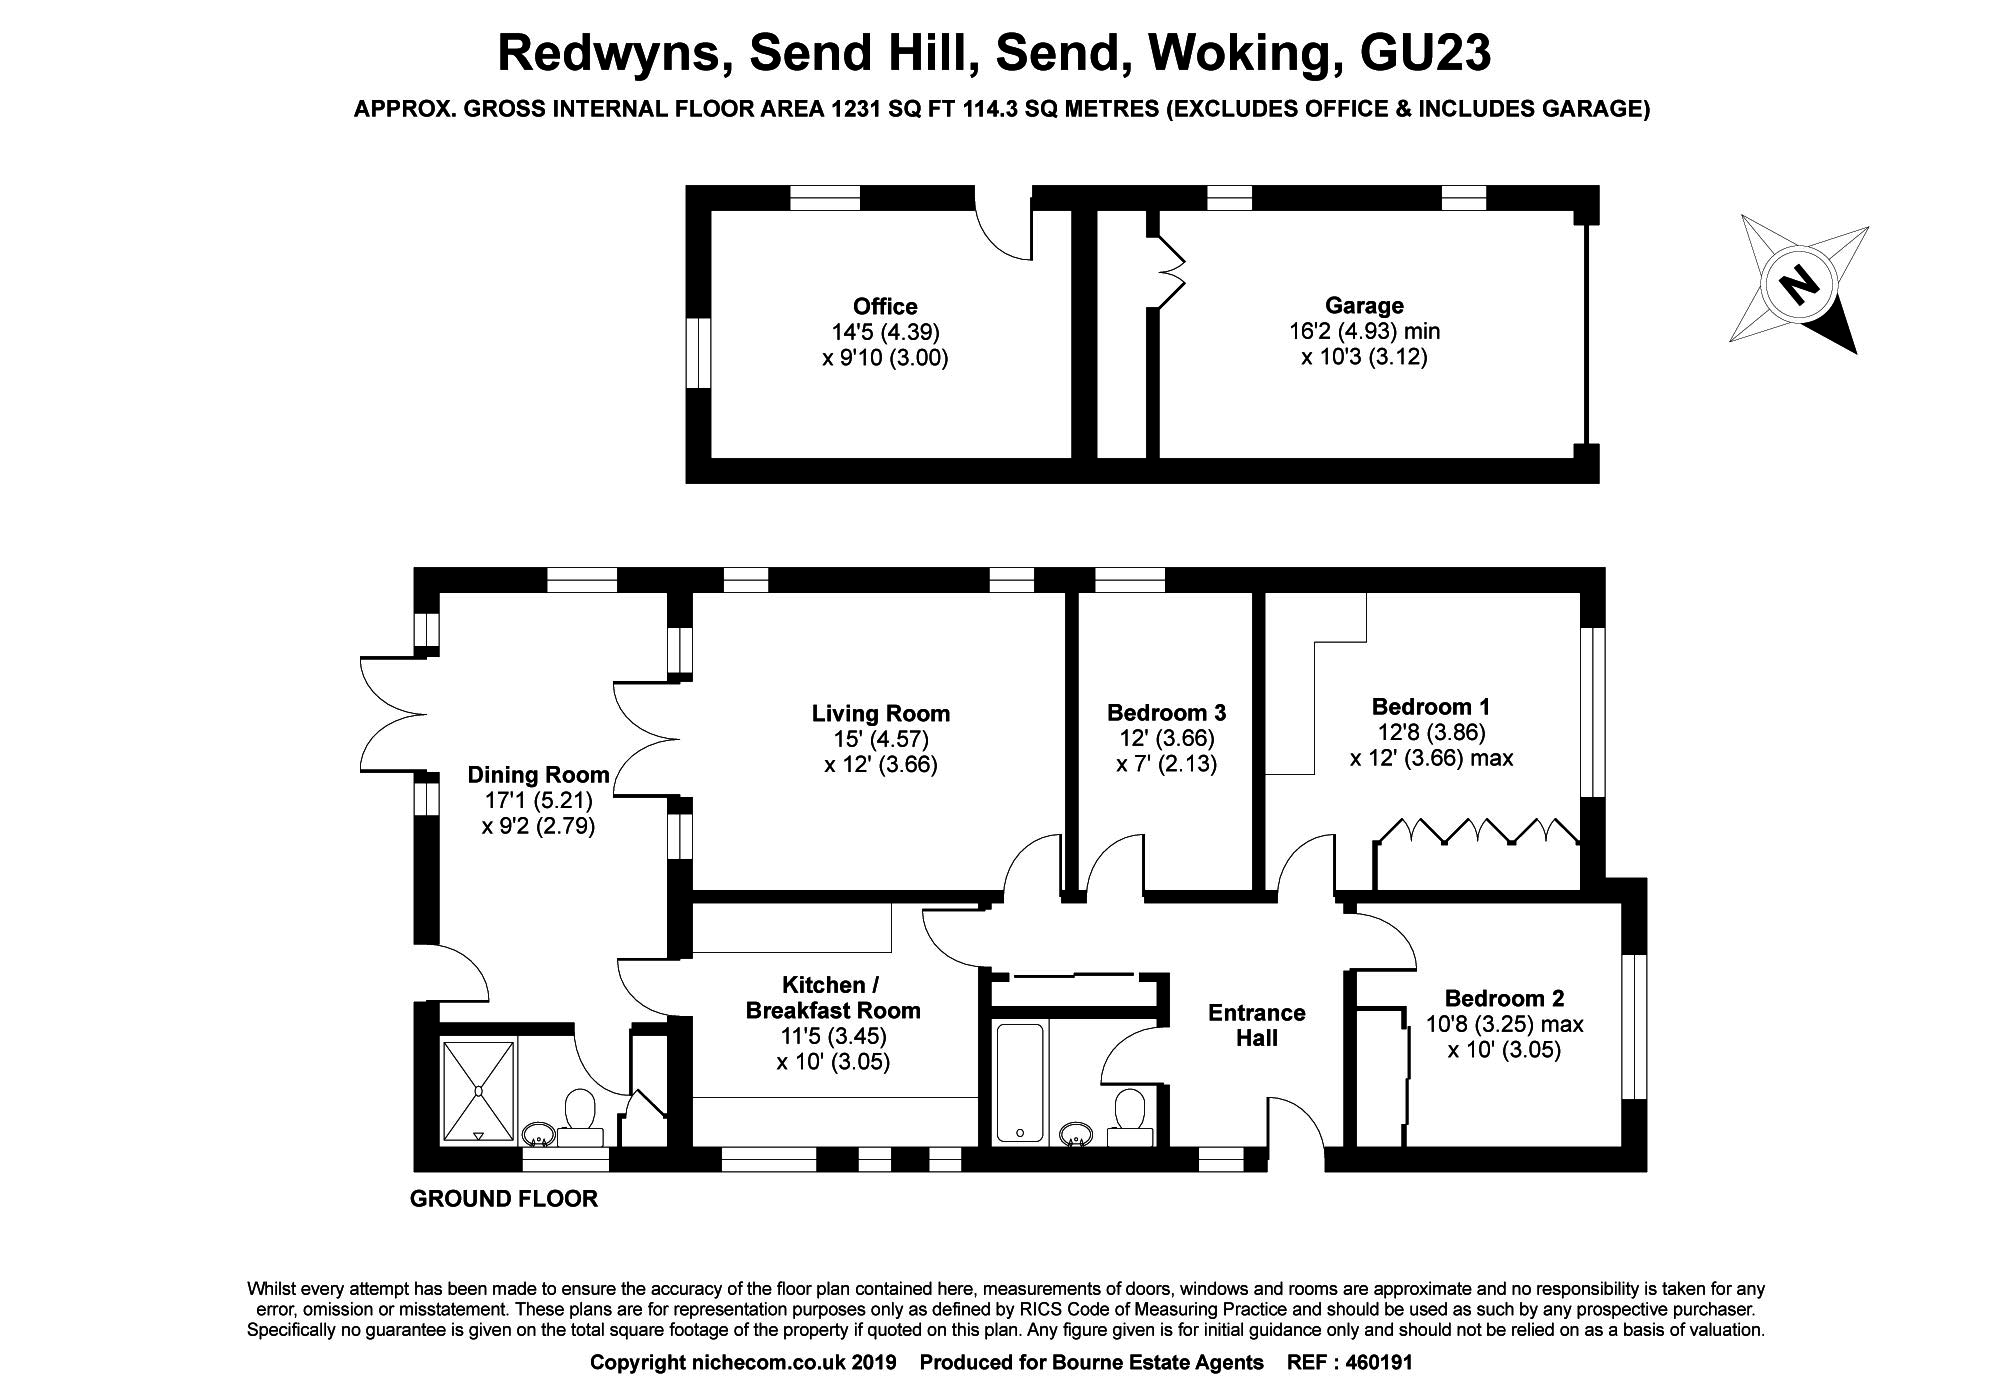 3 Bedrooms Detached bungalow for sale in Send Hill, Send, Woking GU23